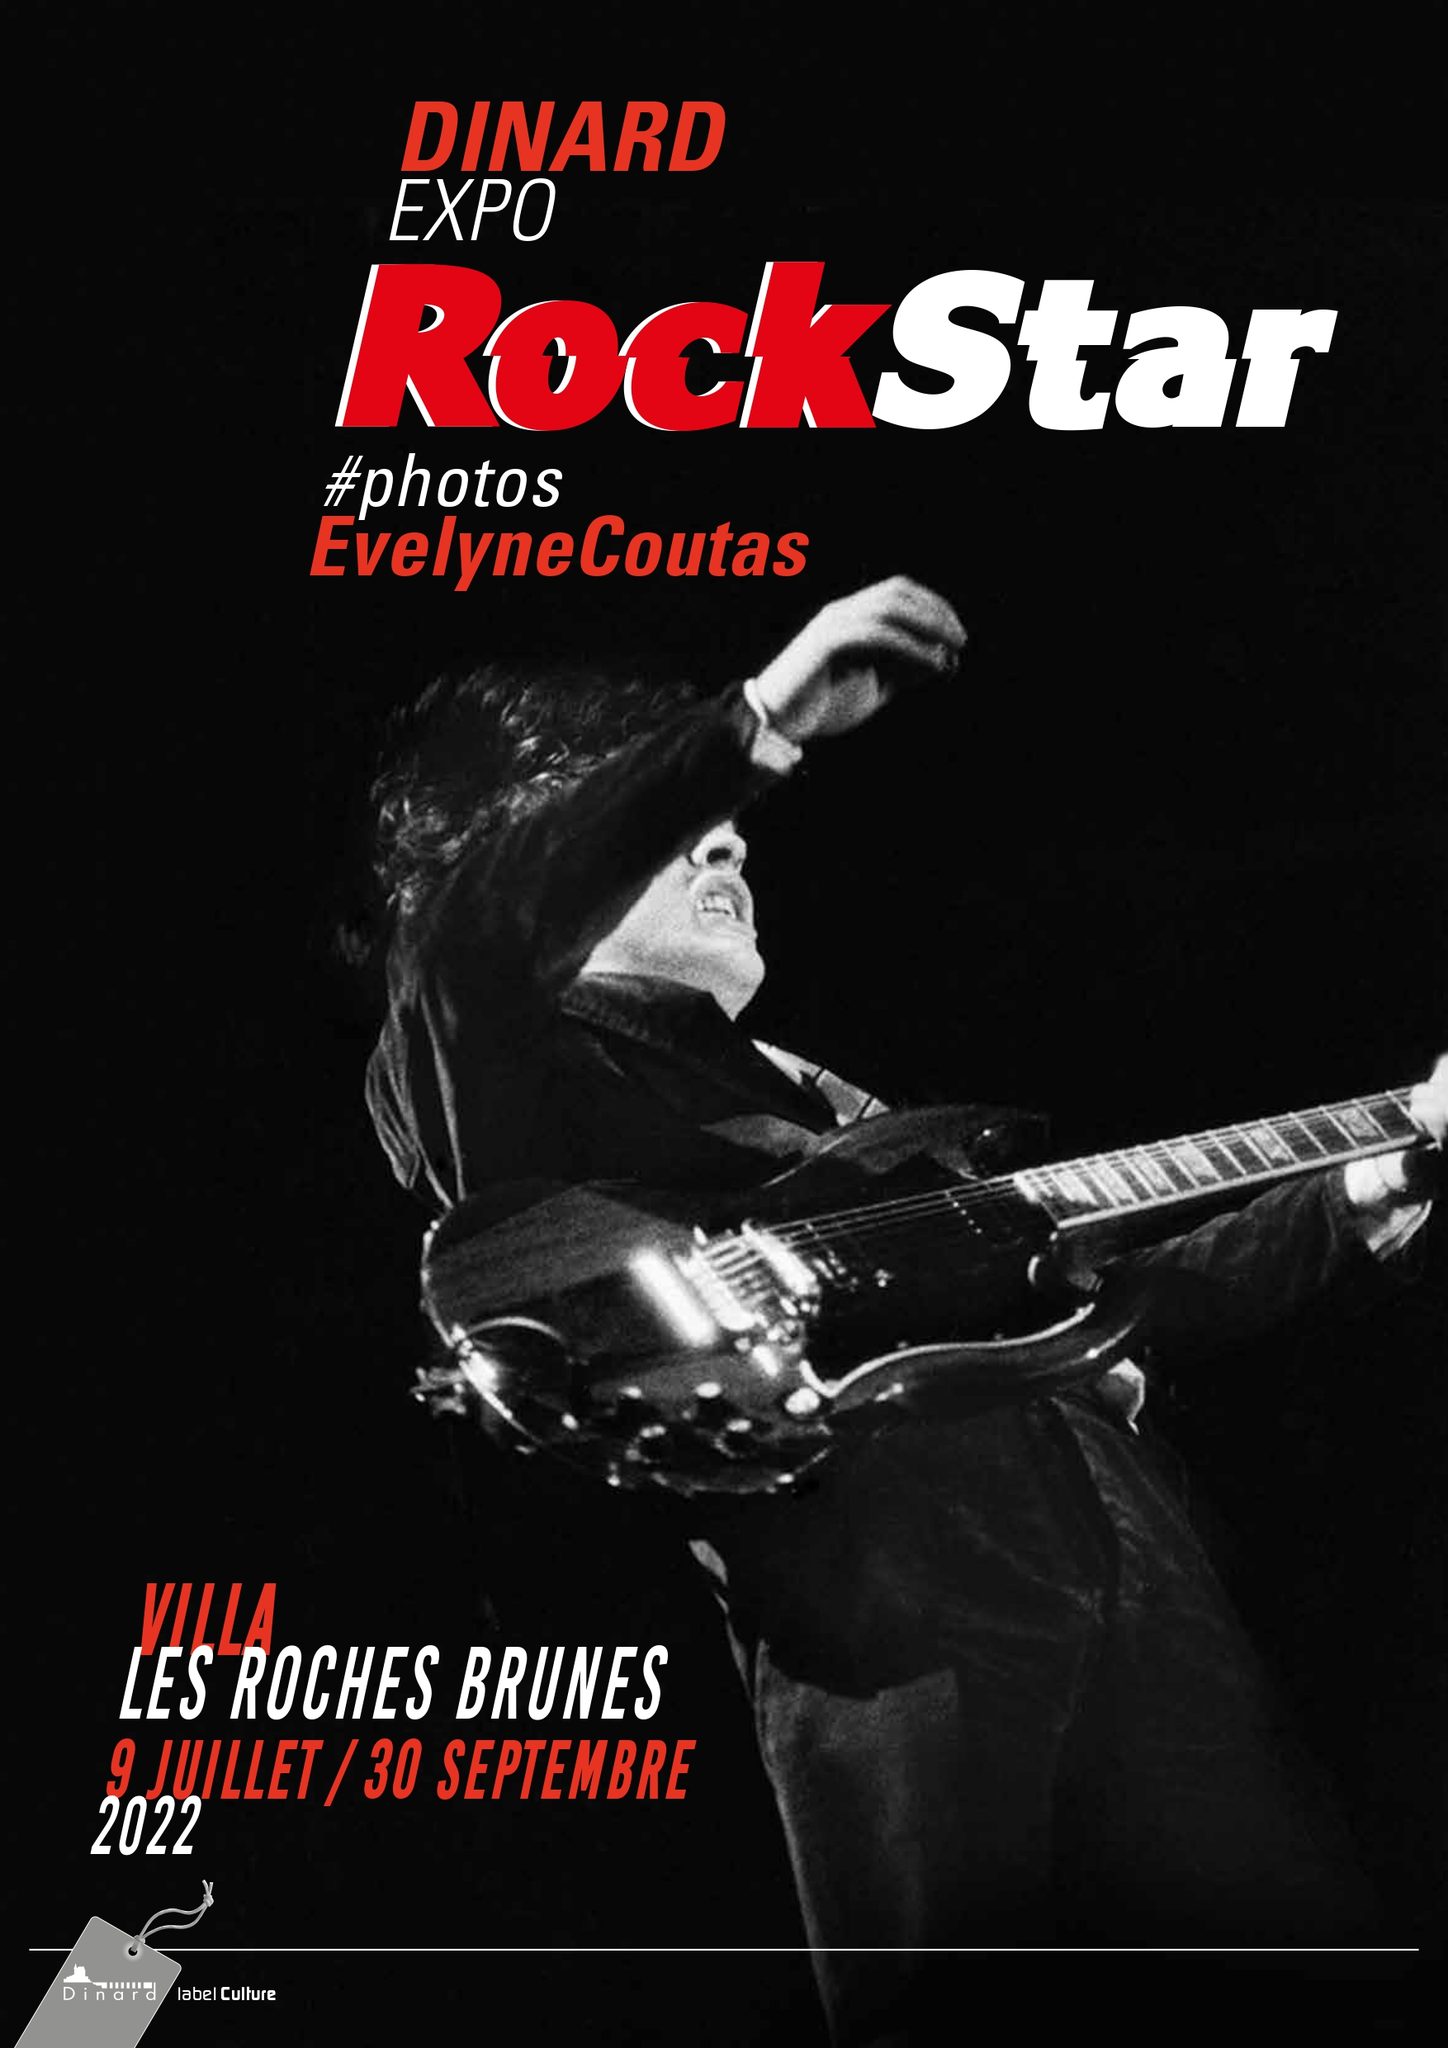 Grande Exposition – "Rock Star" par Evelyne Coutas